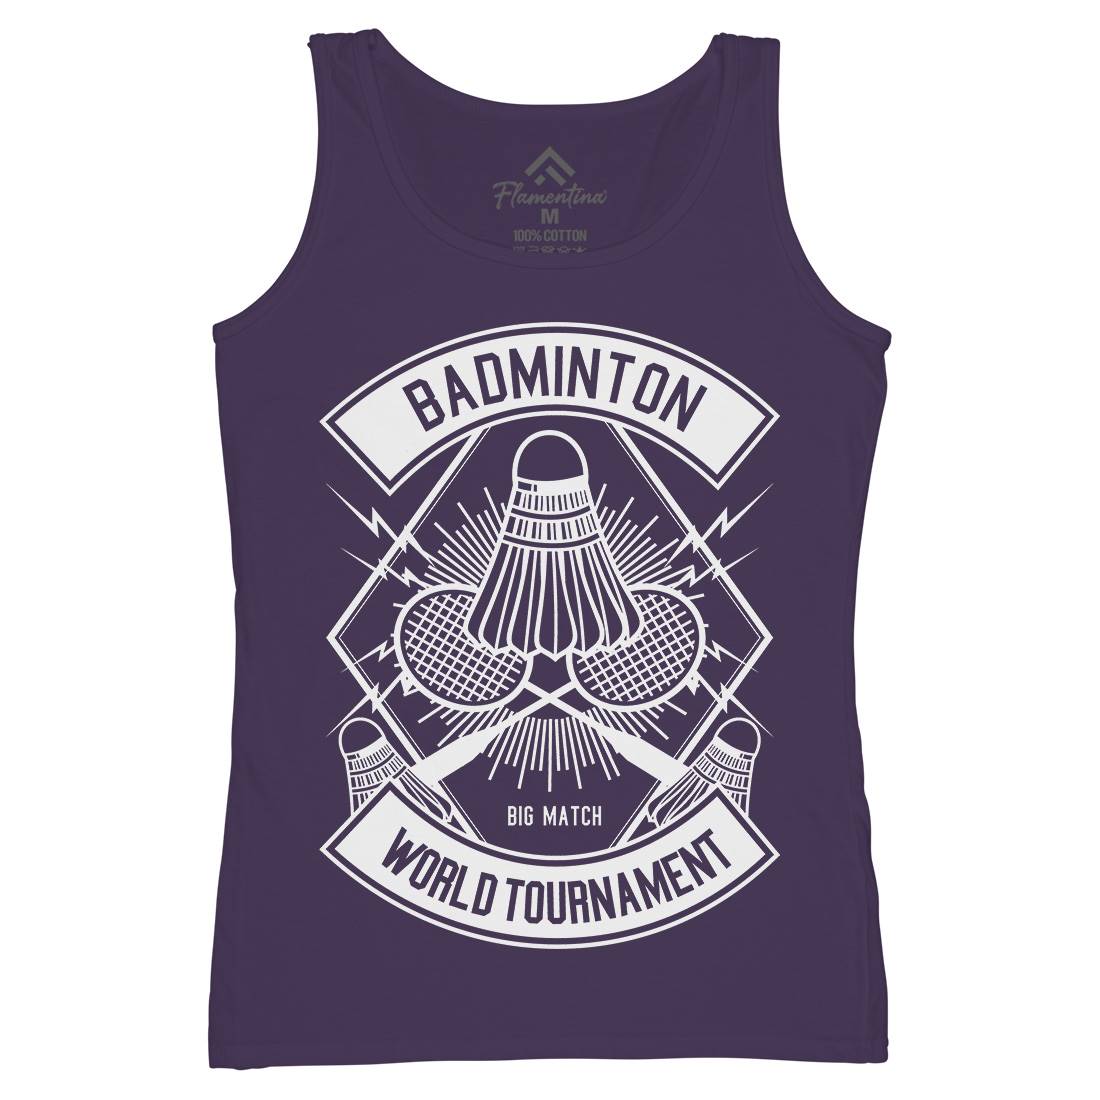 Badminton Womens Organic Tank Top Vest Sport B485